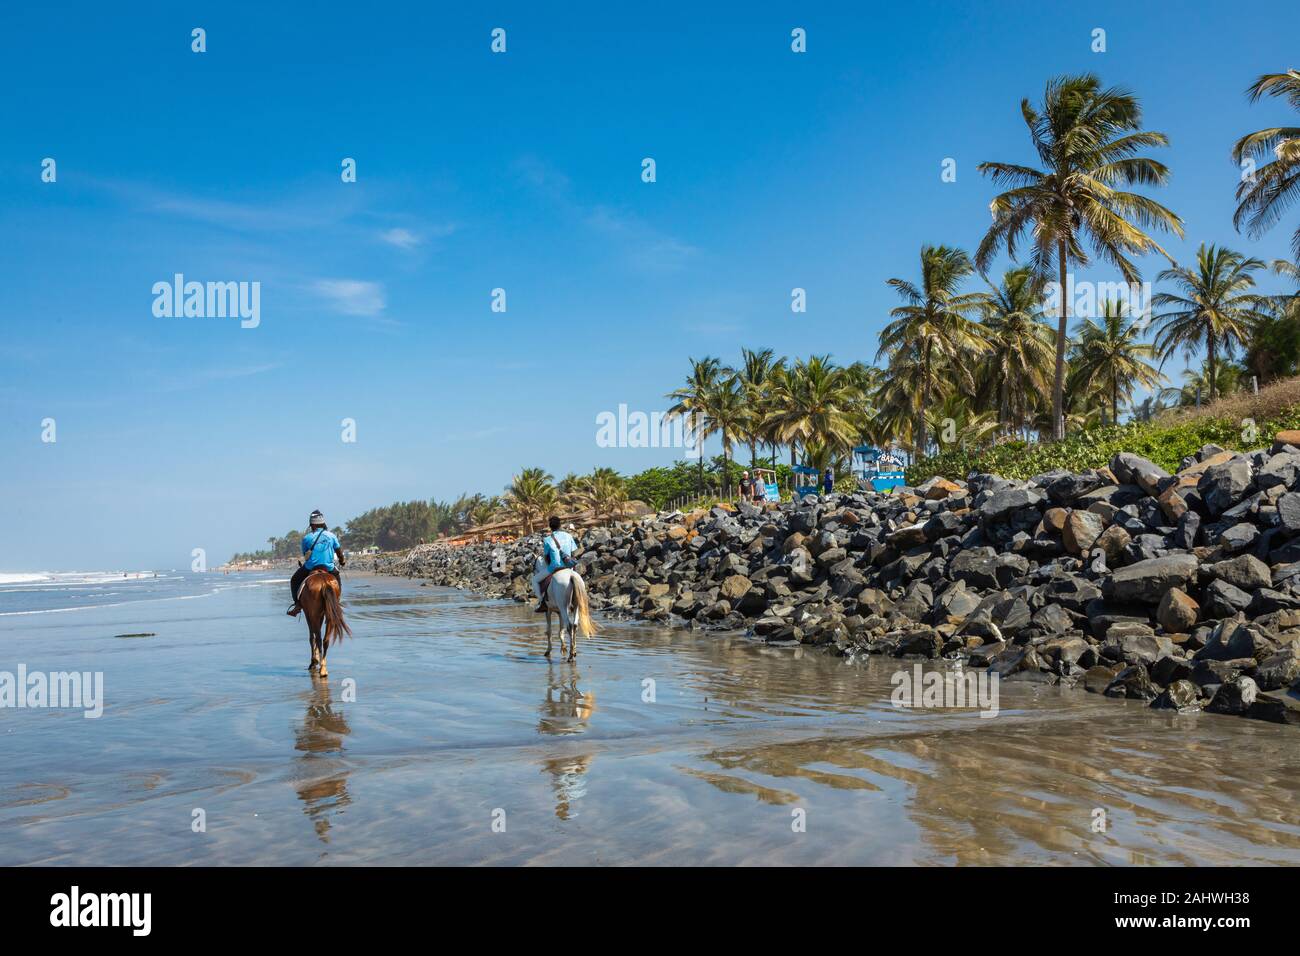 SERREKUNDA GAMBIA - 22. NOVEMBER 2019: Strand in der Nähe der Hotel senegambia Strip in Gambia, Westafrika. Stockfoto